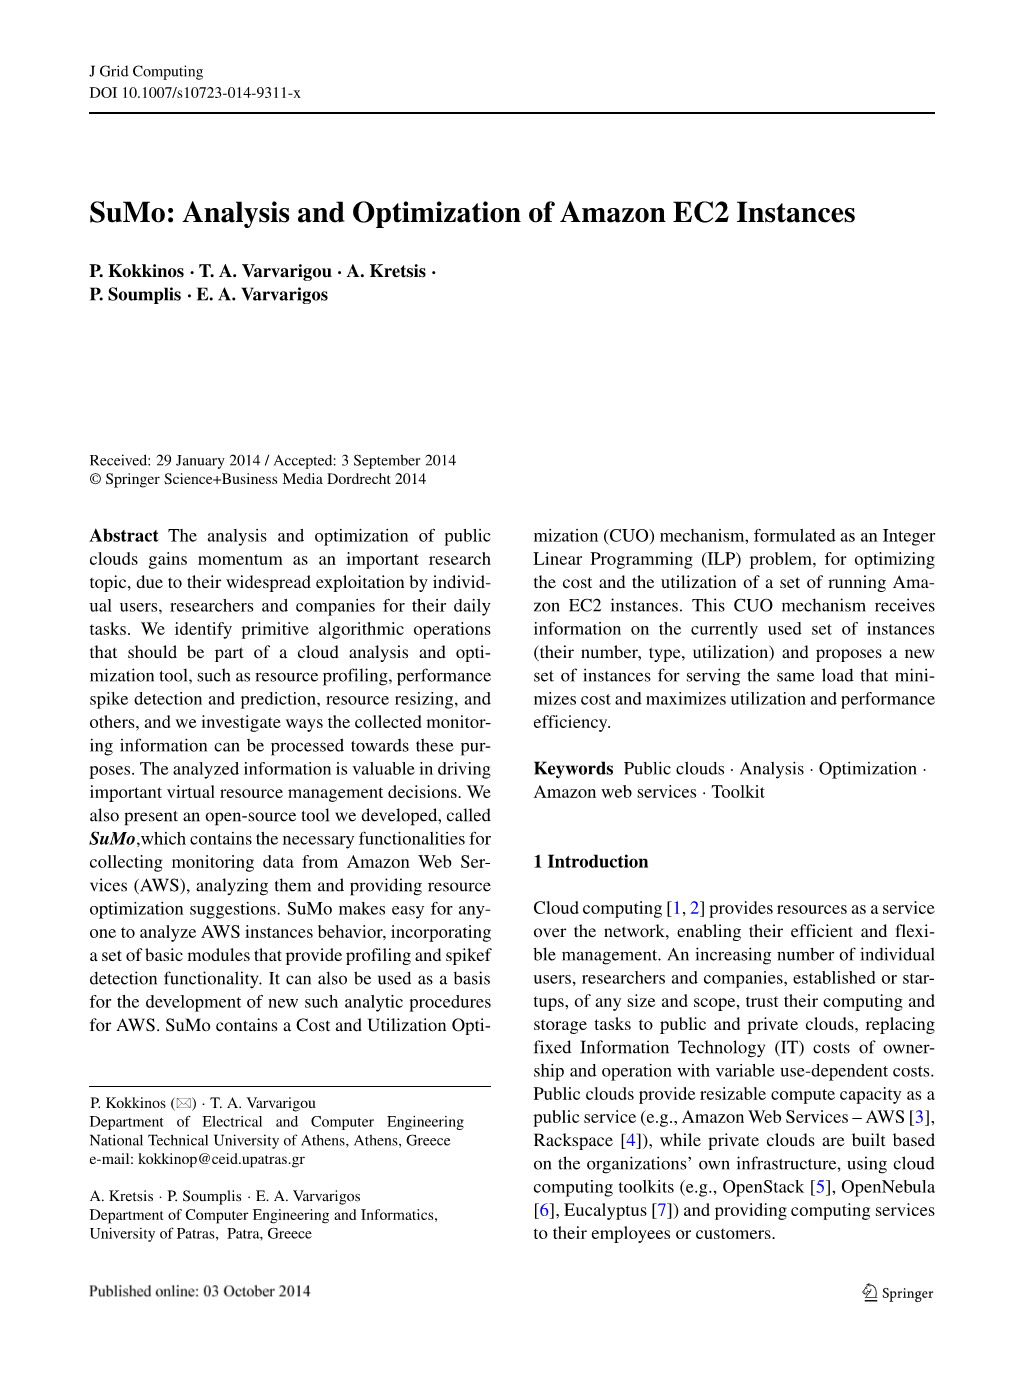 Sumo: Analysis and Optimization of Amazon EC2 Instances